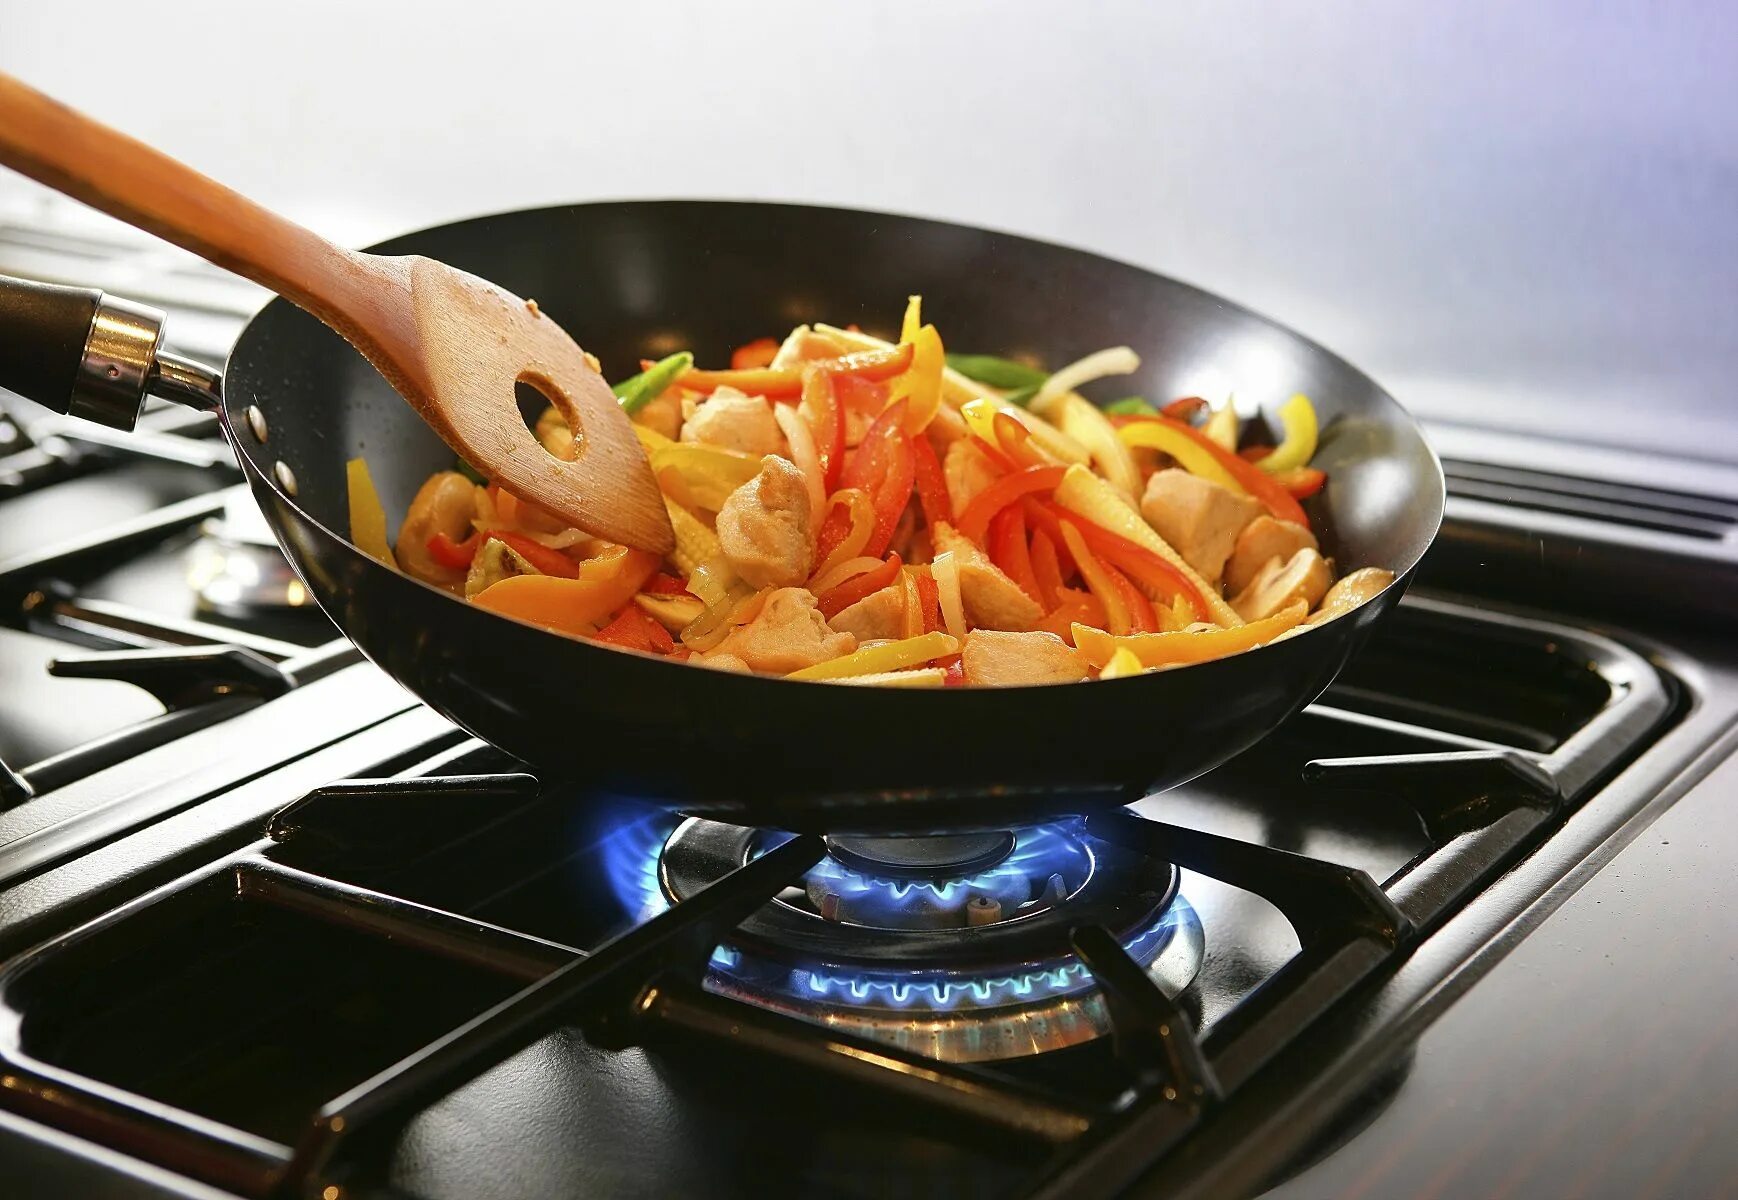 Газовая плита вок (Wok). Сковородка на огне. Приготовление пищи на огне. Сковородка с едой на плите. Wok плита газовая